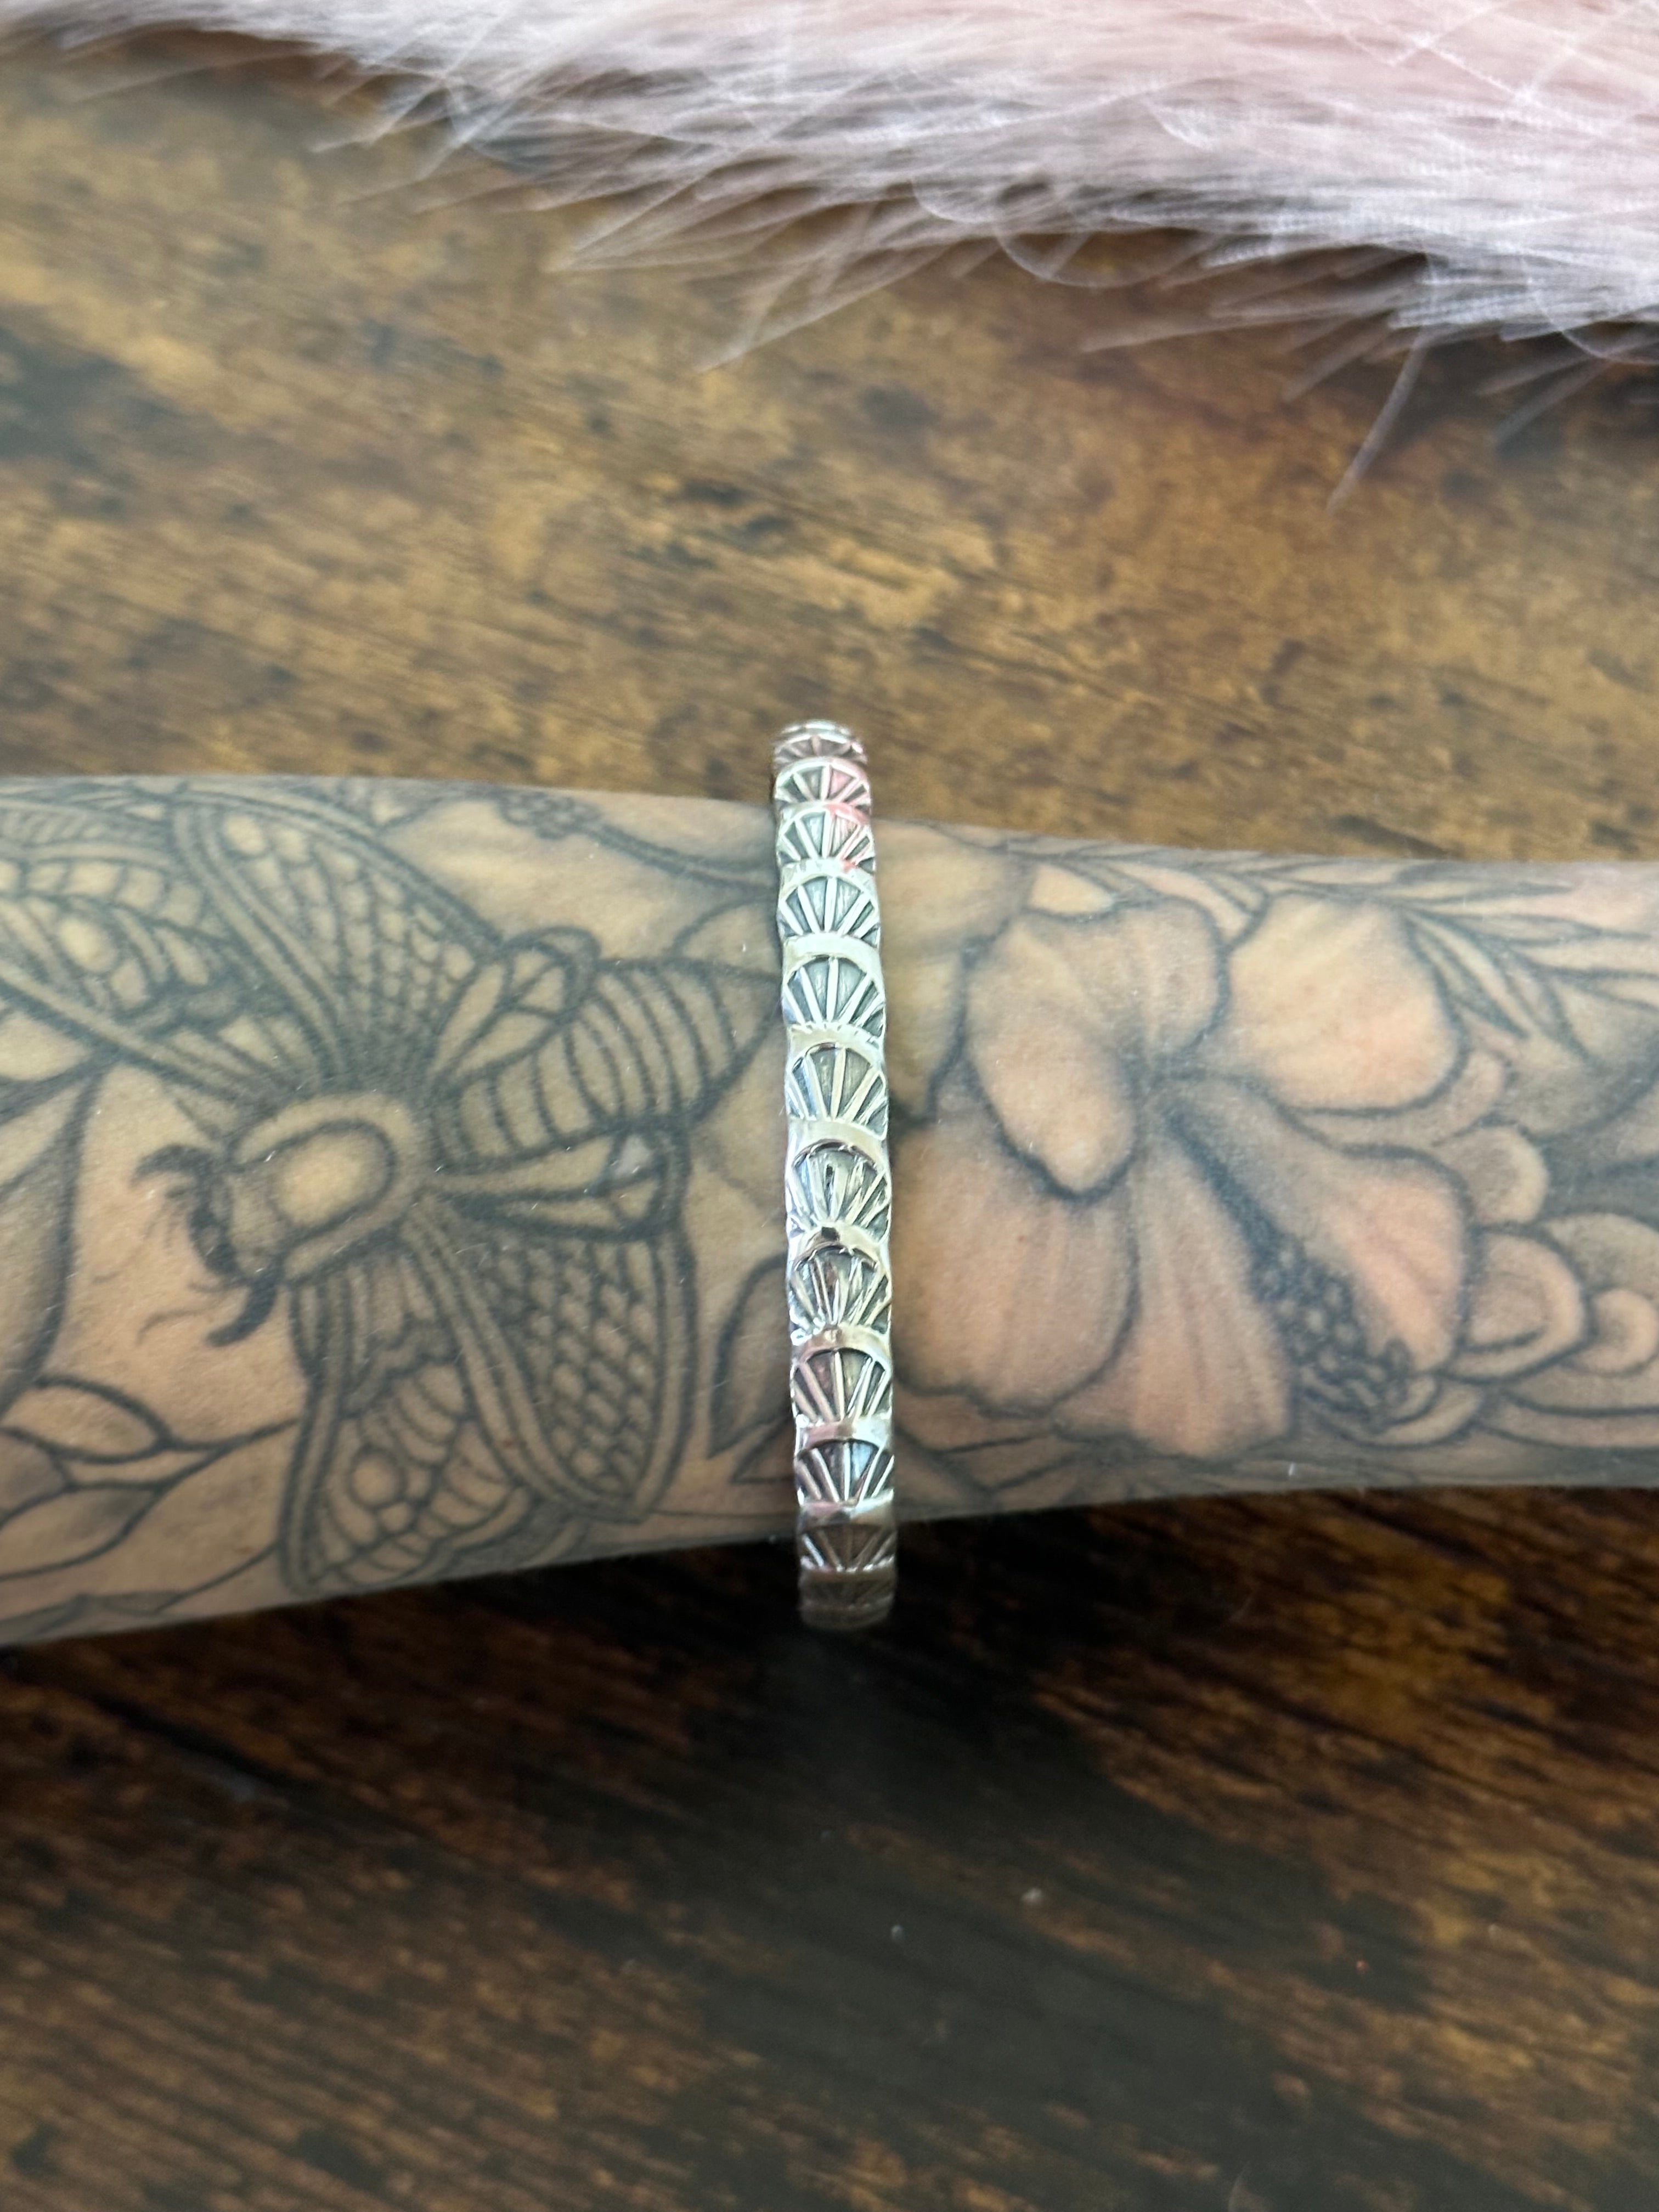 Southwest Made Sterling Silver Cuff Bracelet